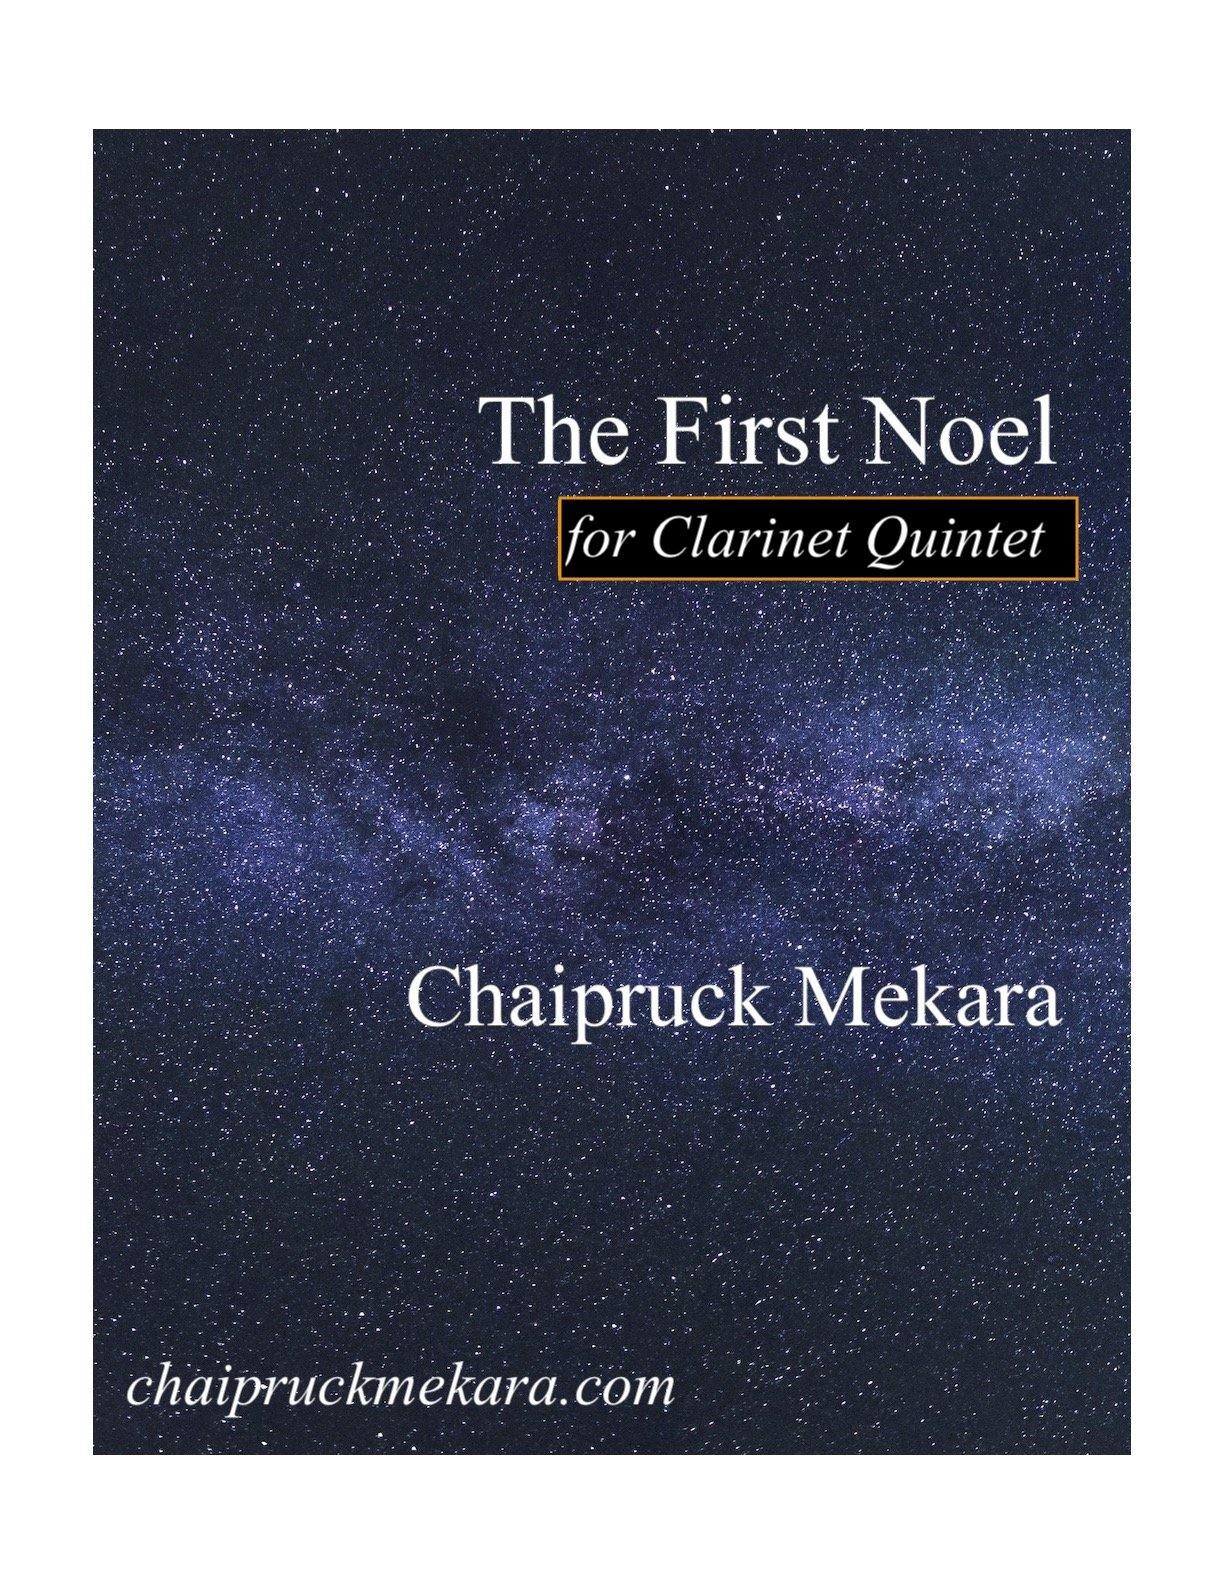 The First Noel for Clarinet Quintet - ChaipruckMekara